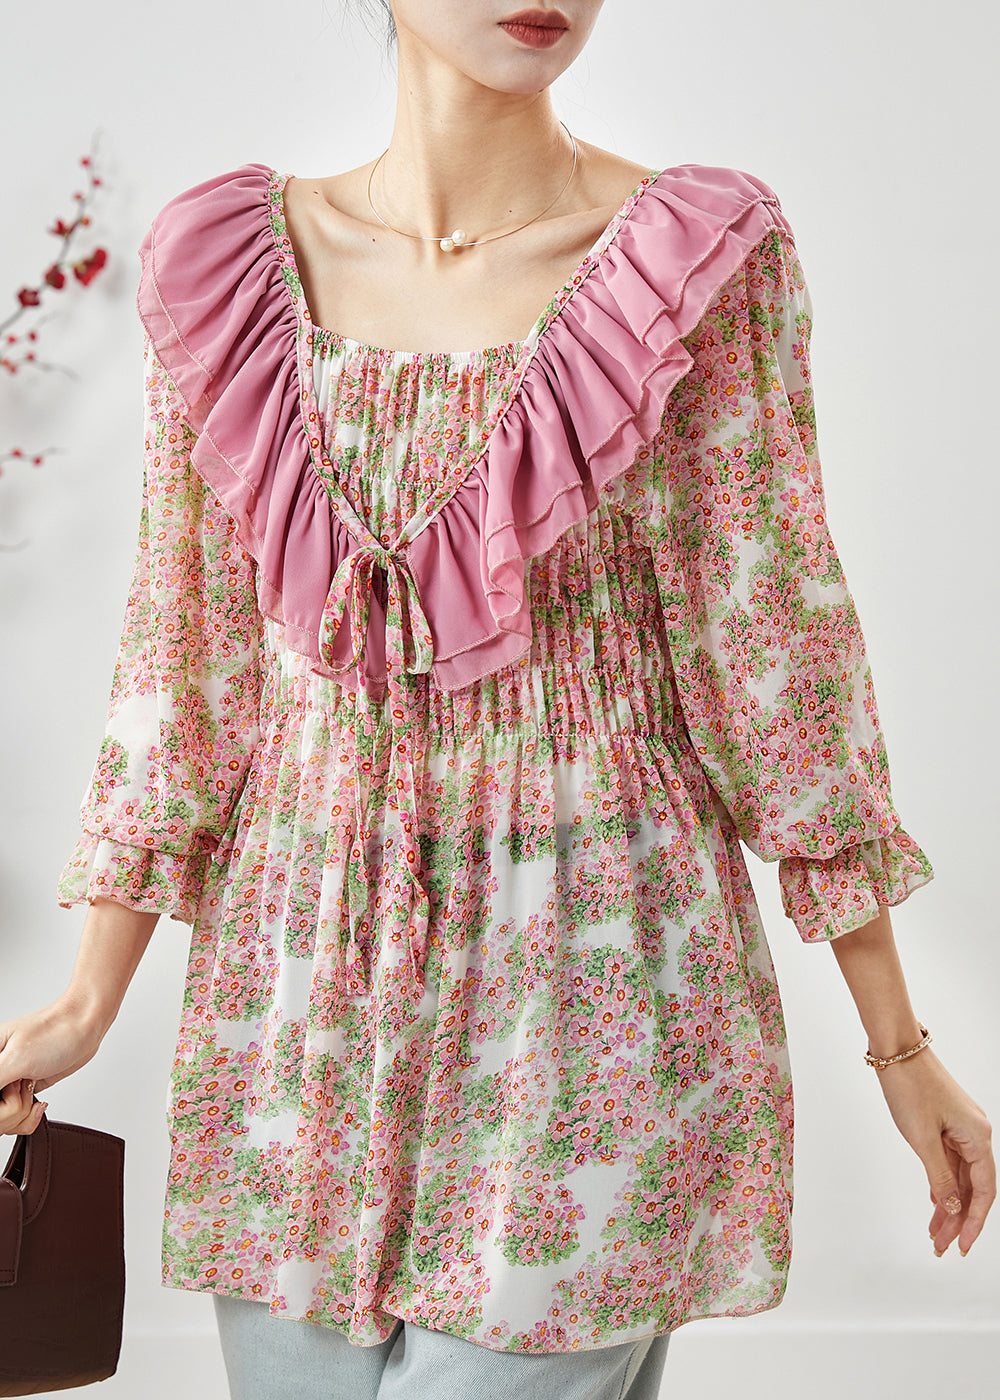 French Pink Ruffled Print Chiffon Shirt Top Spring